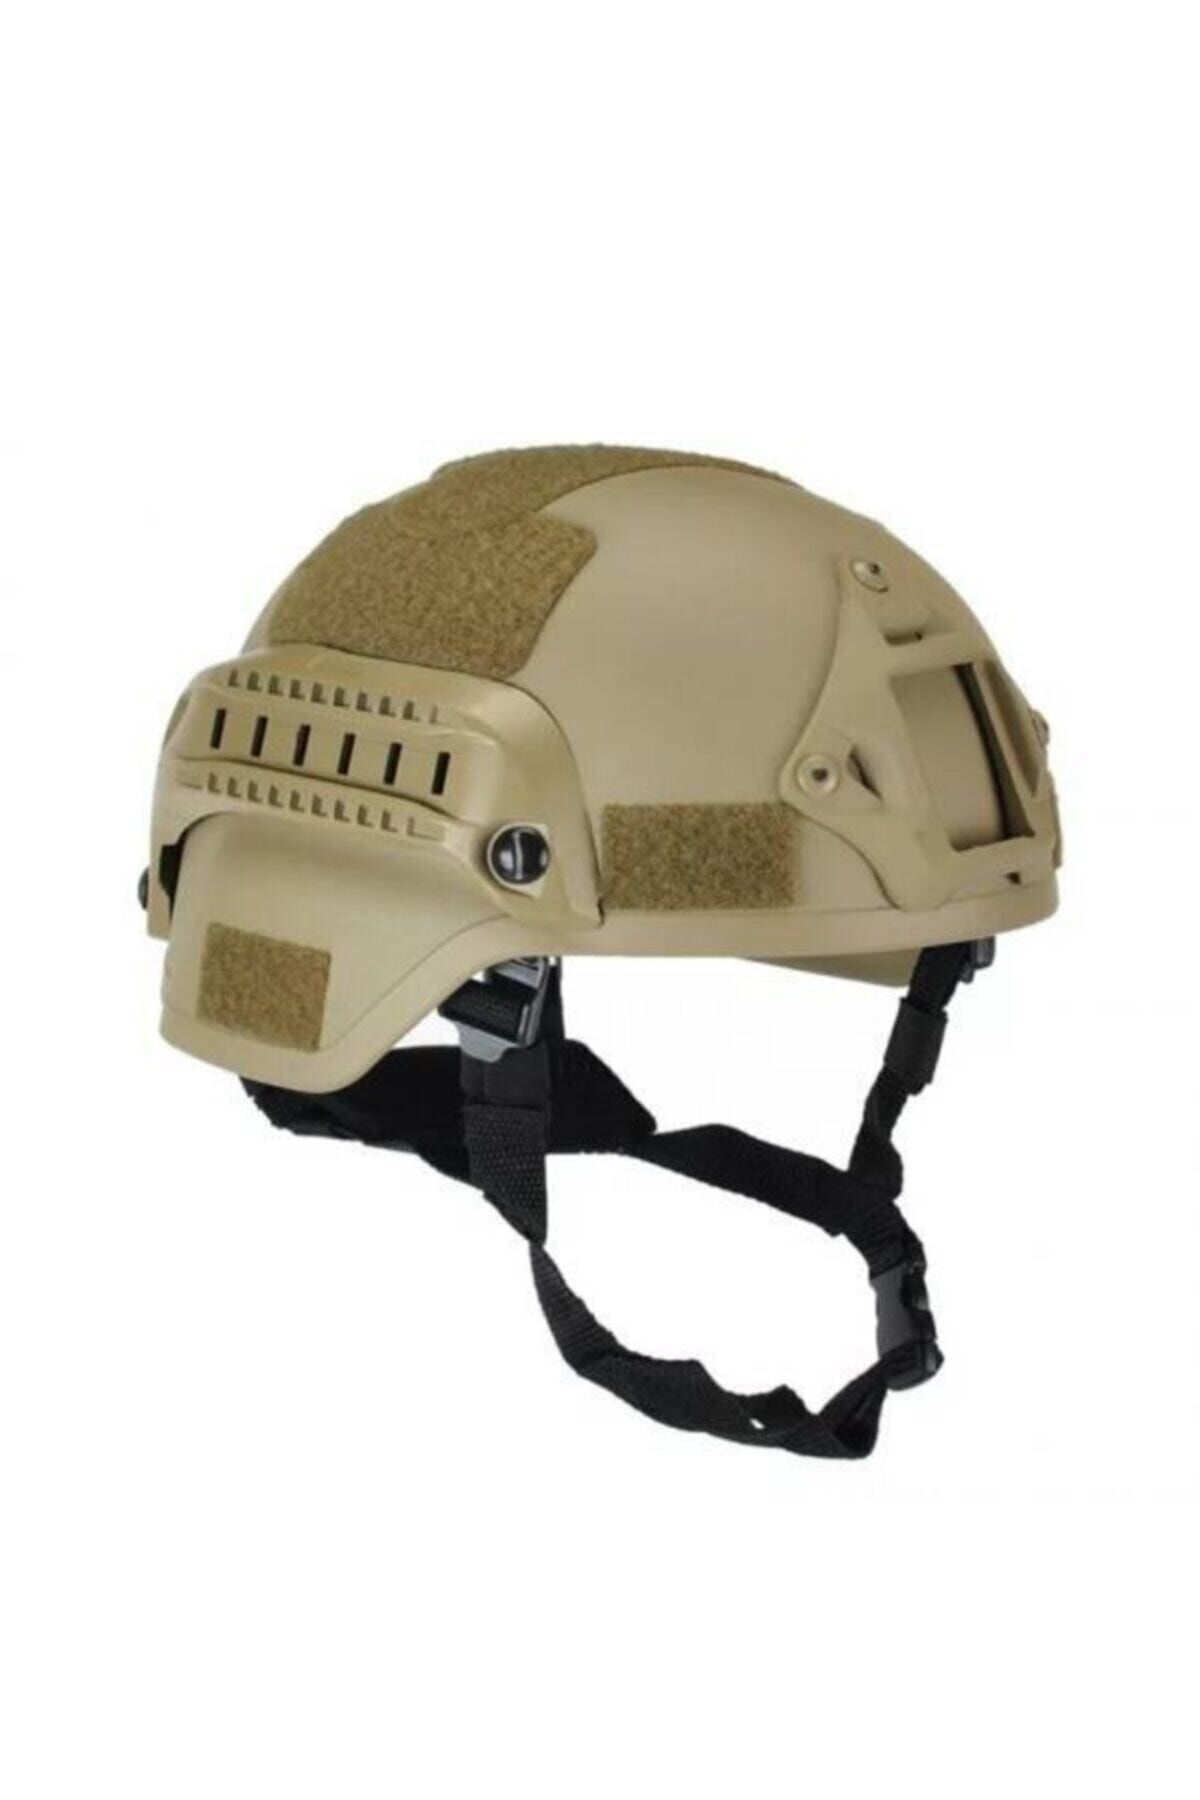 Silyon Askeri Giyim Koruyucu Başlık Miğfer Kask Paintball/ Airsoft